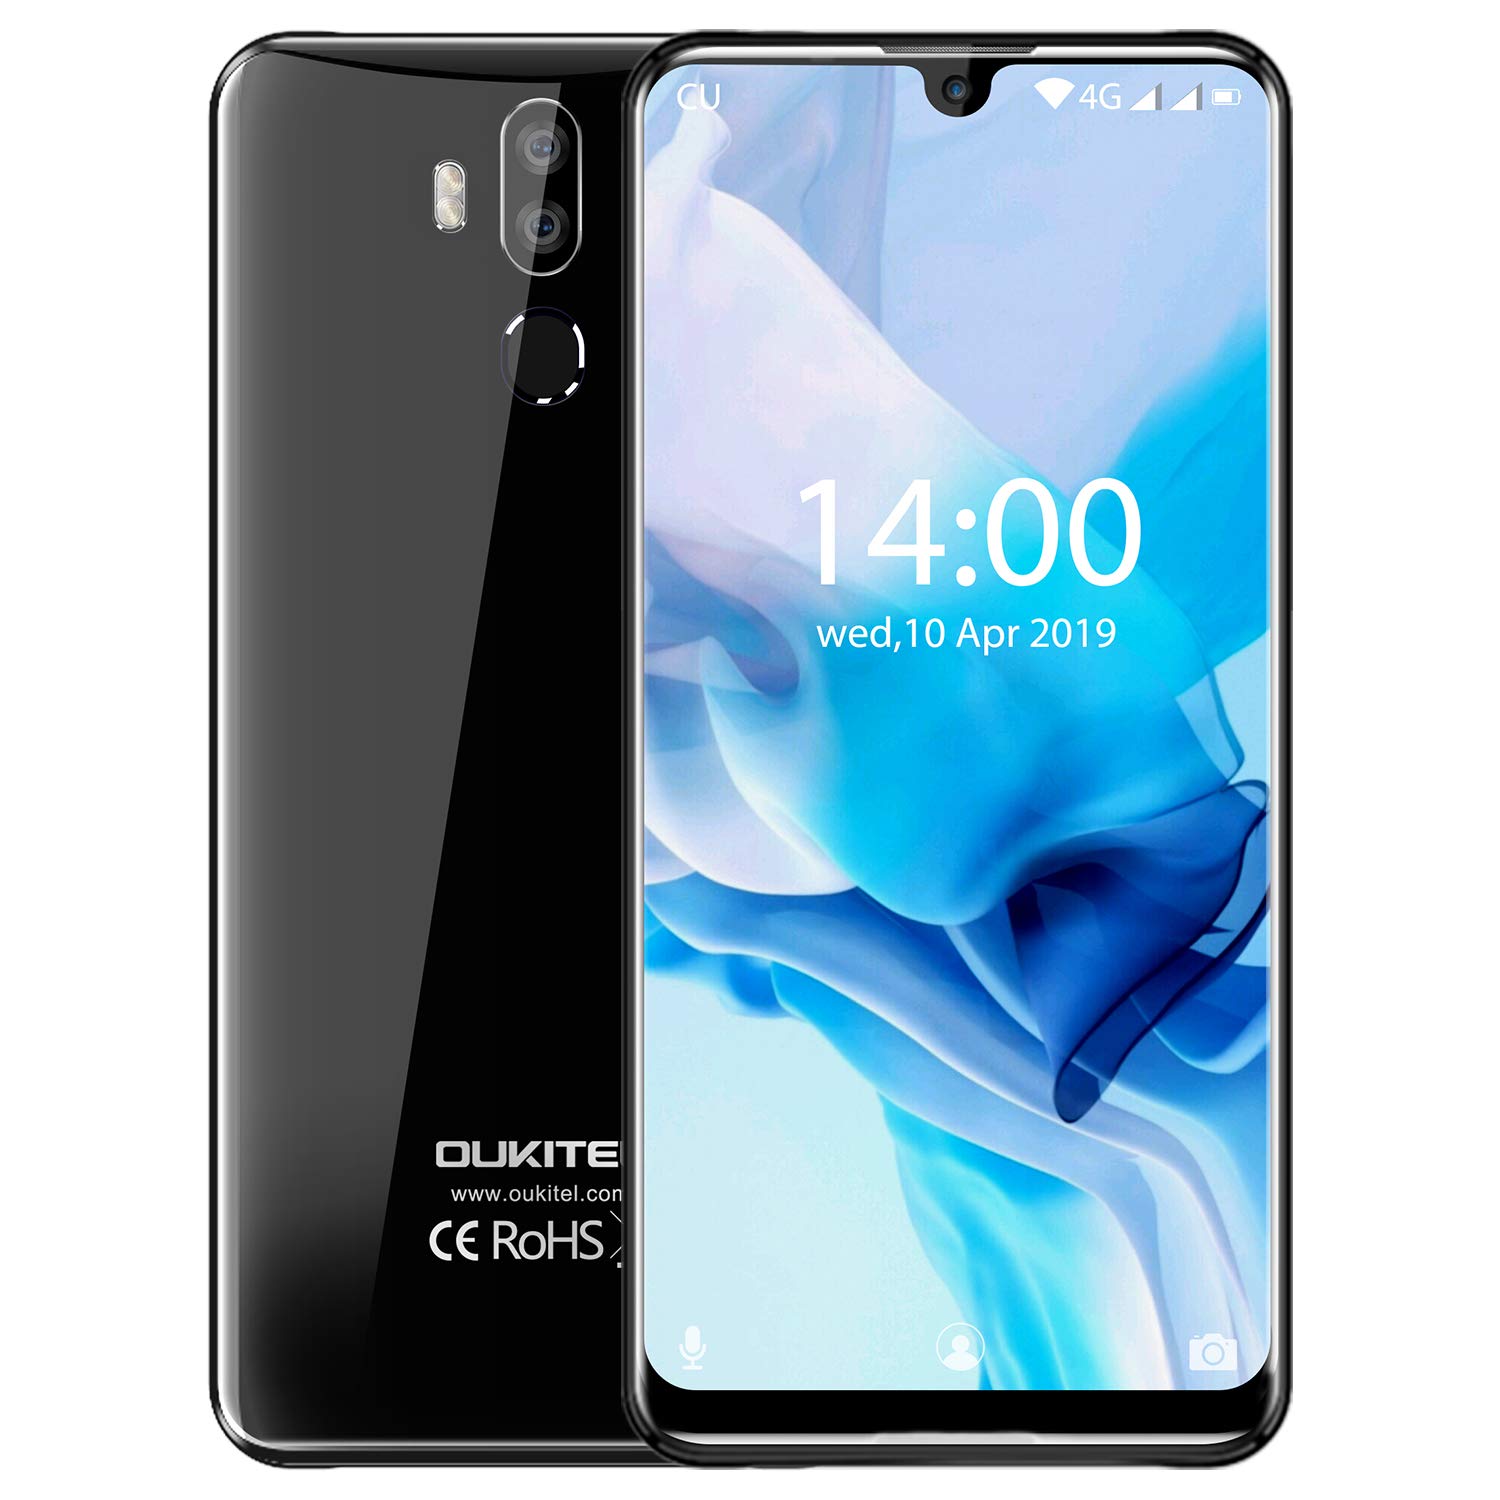 OUKITEL K9 Unlocked Cell Phones 7.12